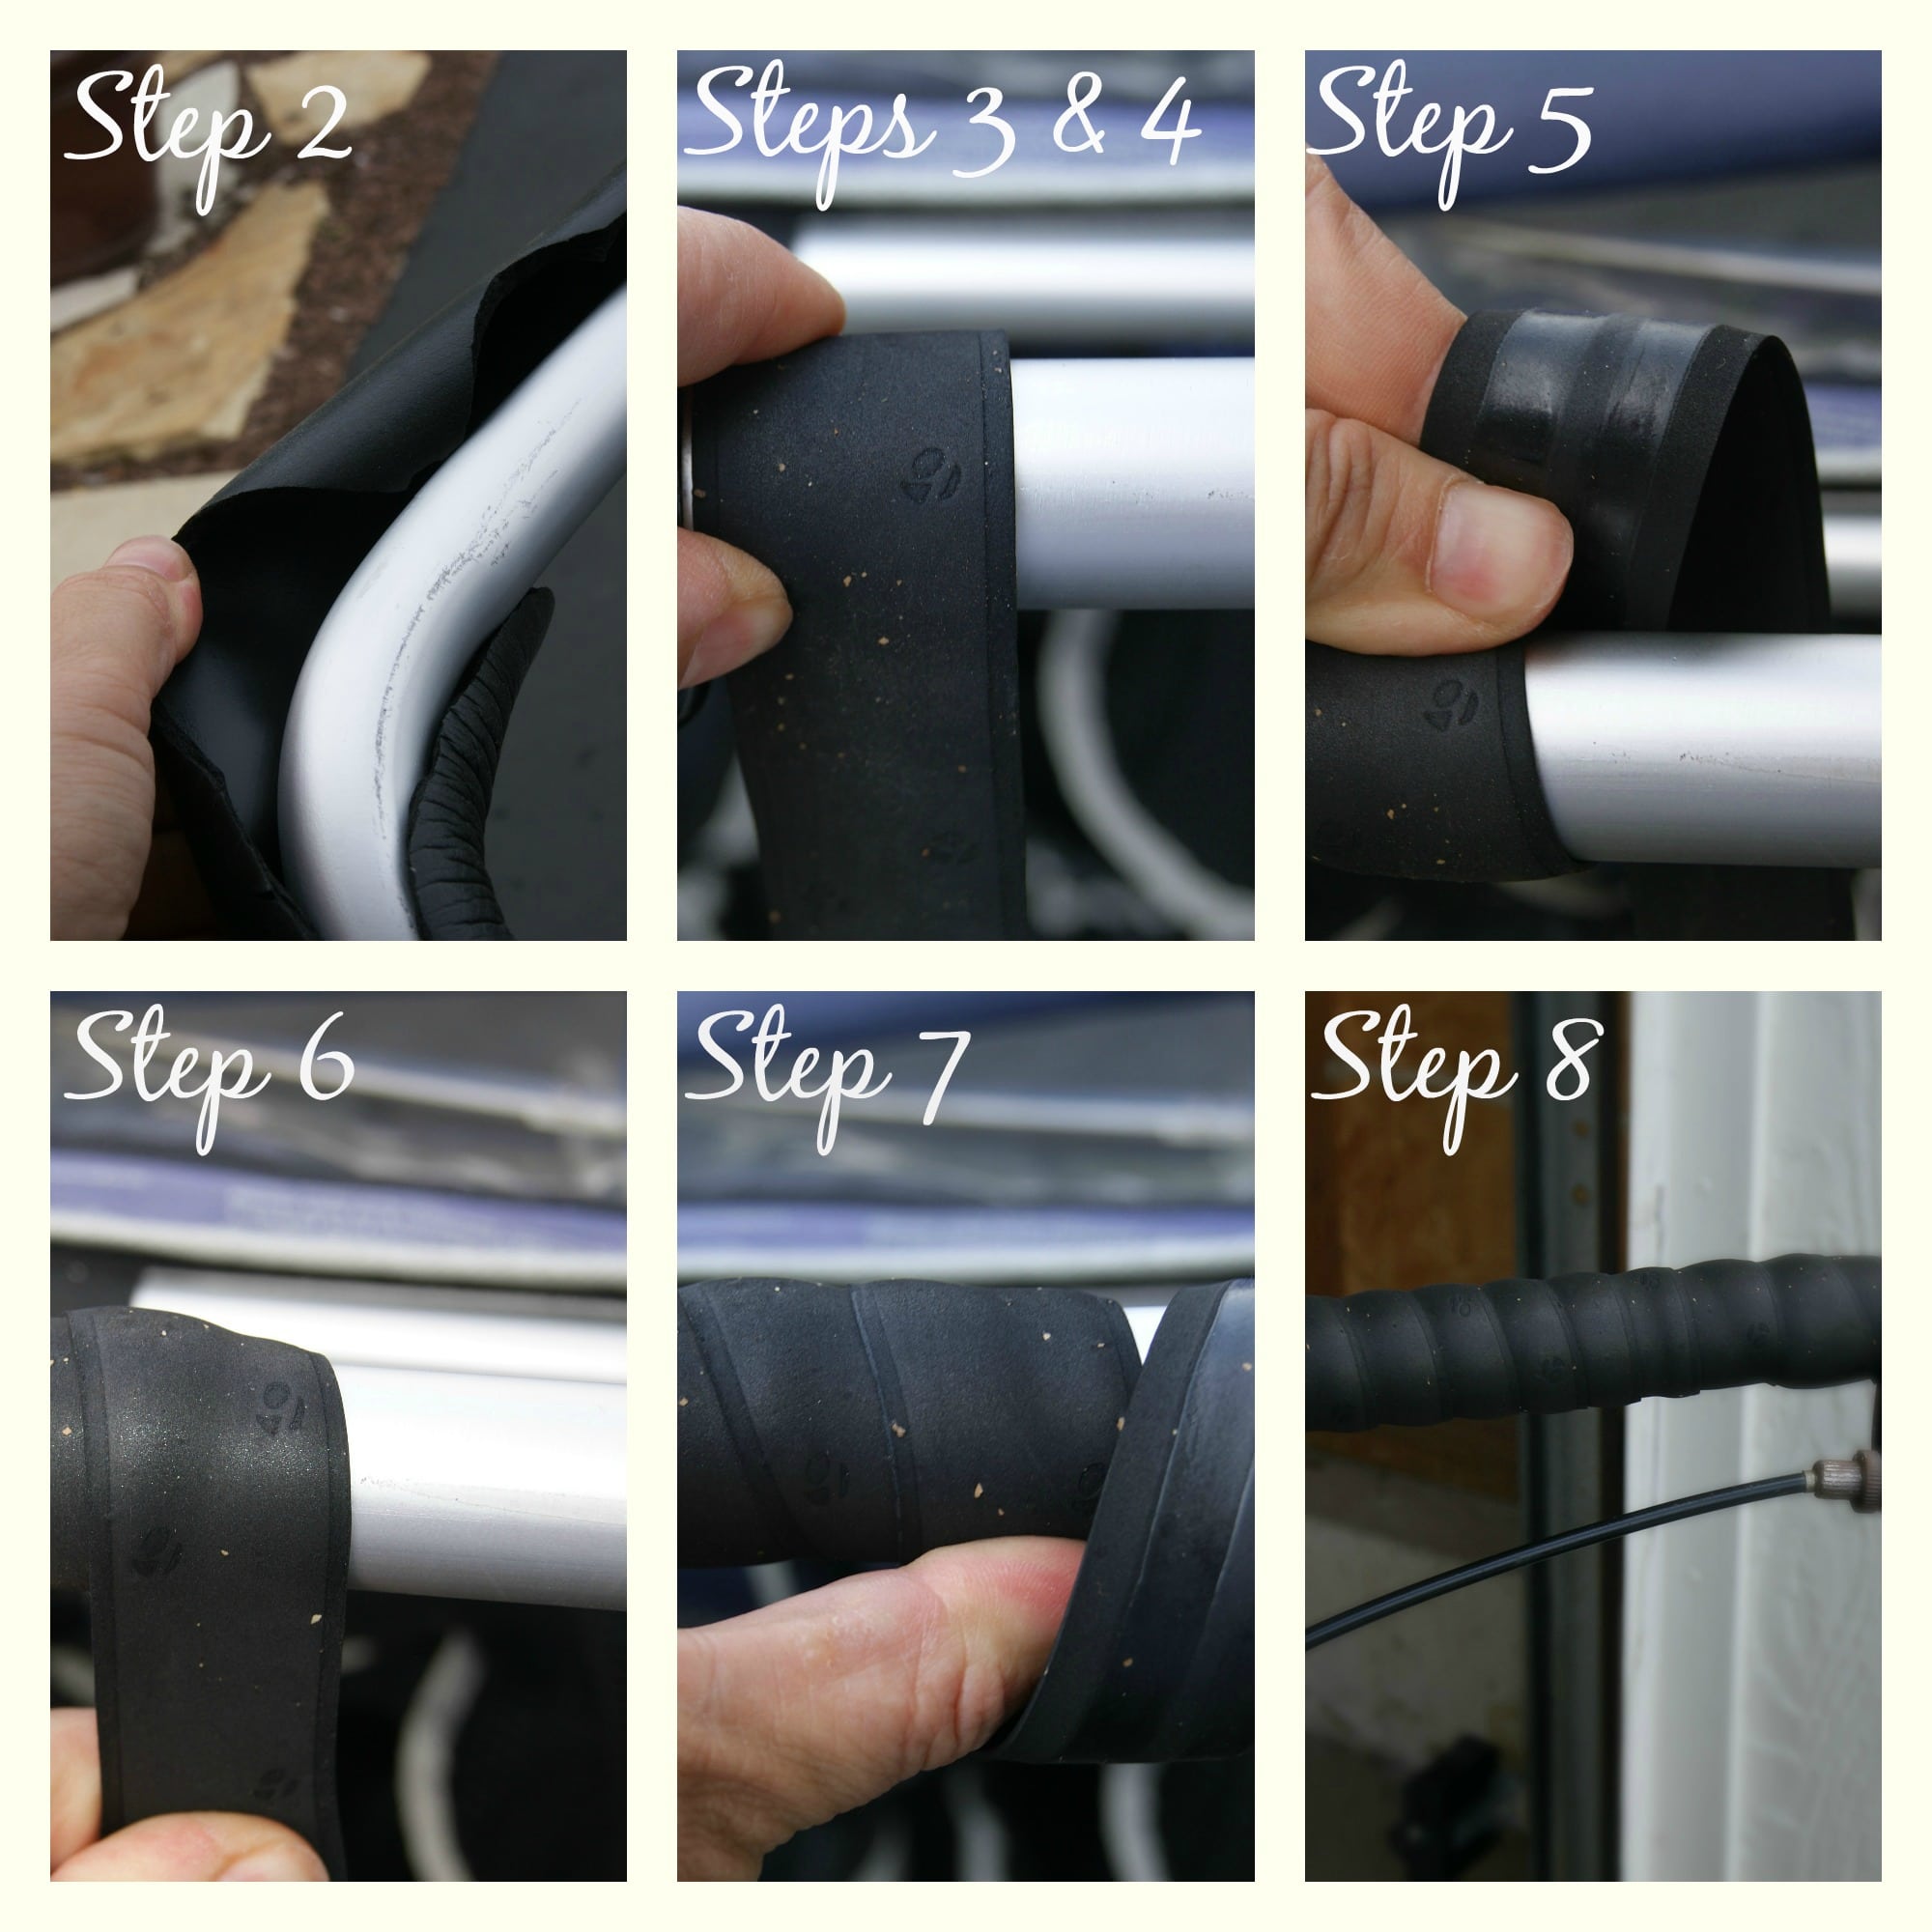 graco stroller foam handle replacement